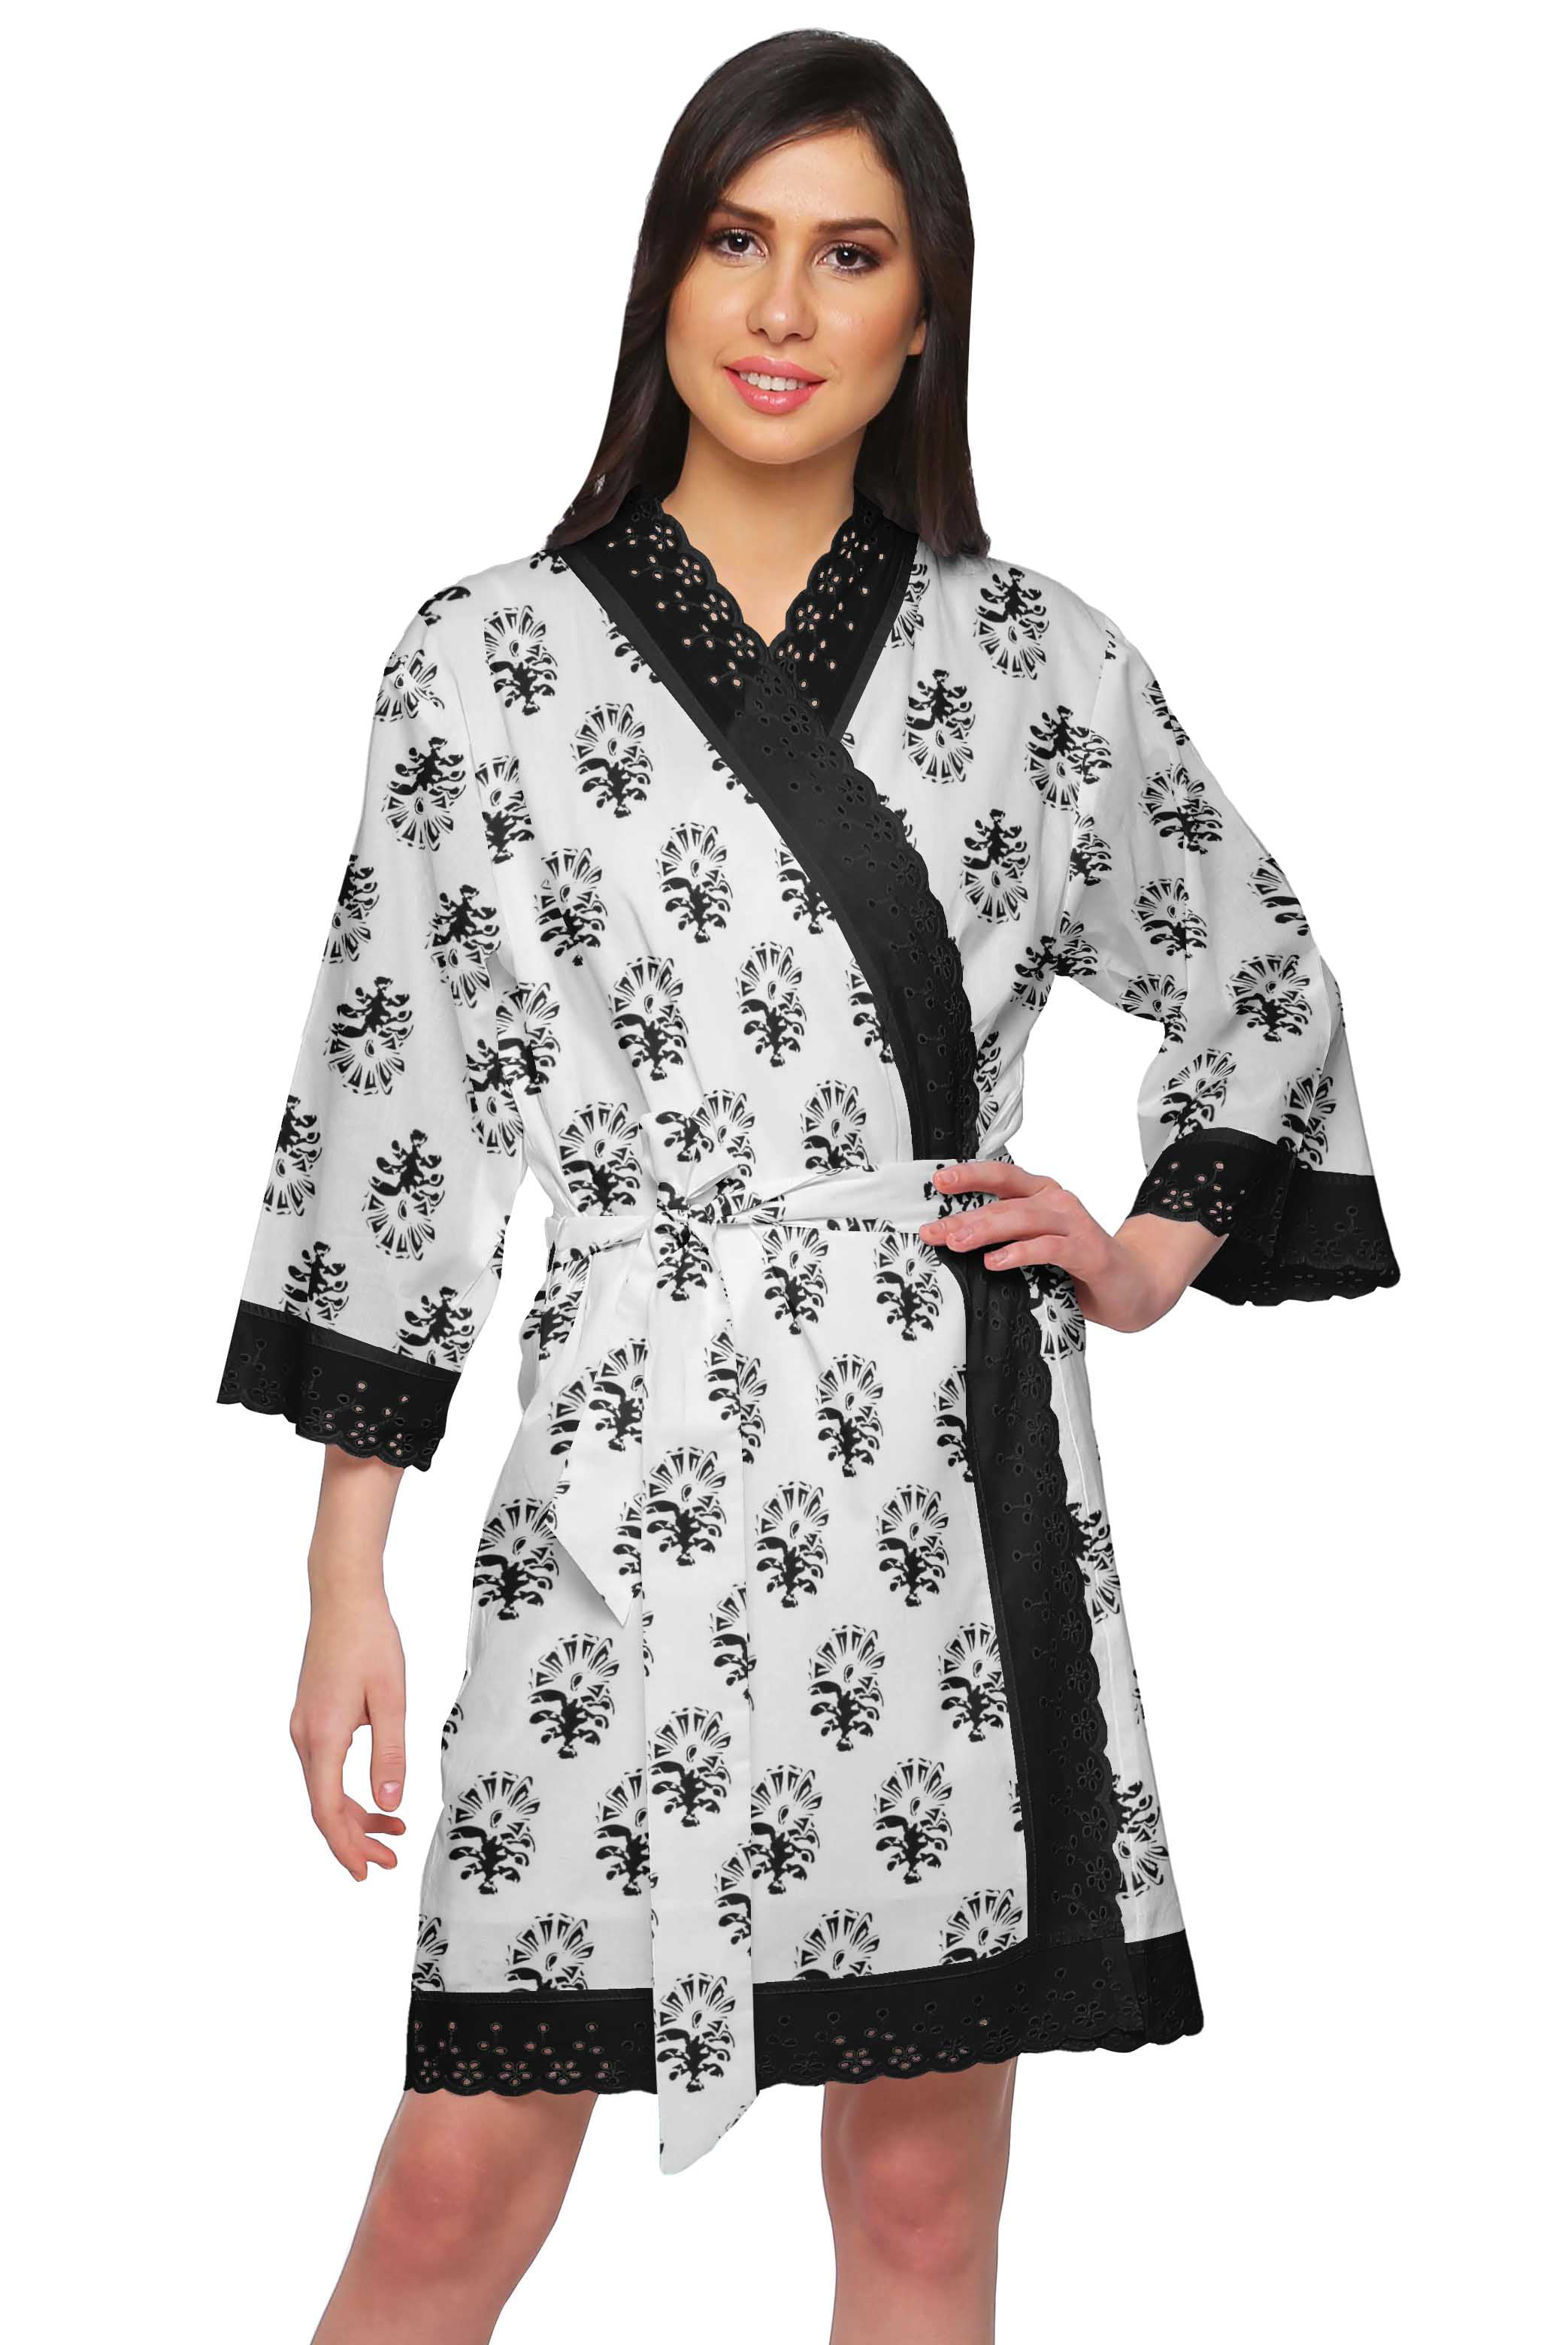 Details about   Winter Thick Bathrobe Soft Jacquard Flannel Bath Robe Kimono Robes Full Sleeve 